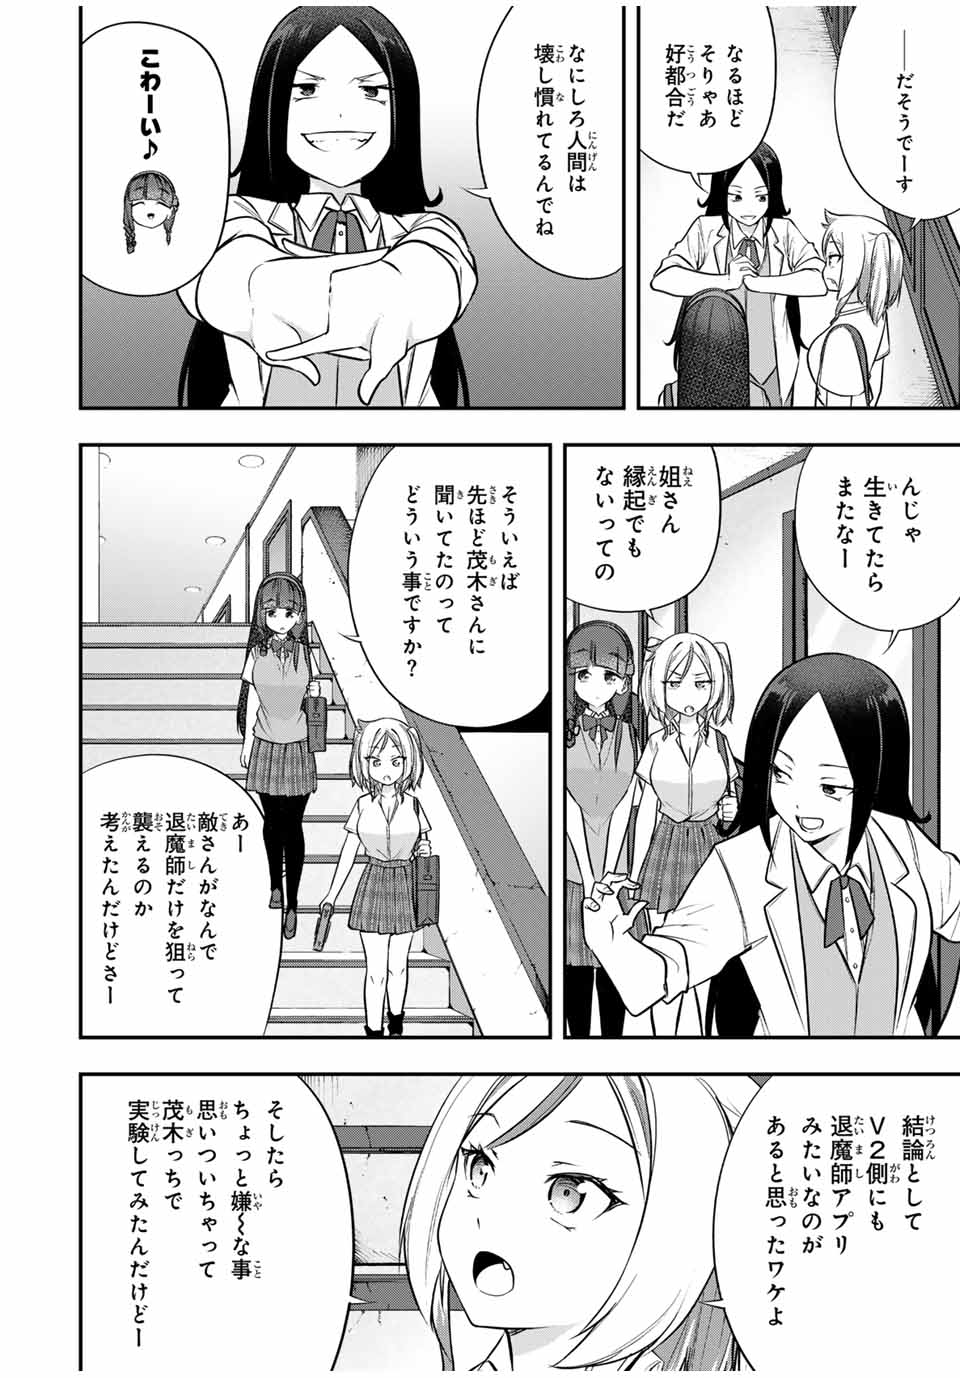 Heroine wa xx Okasegitai - Chapter 13 - Page 16